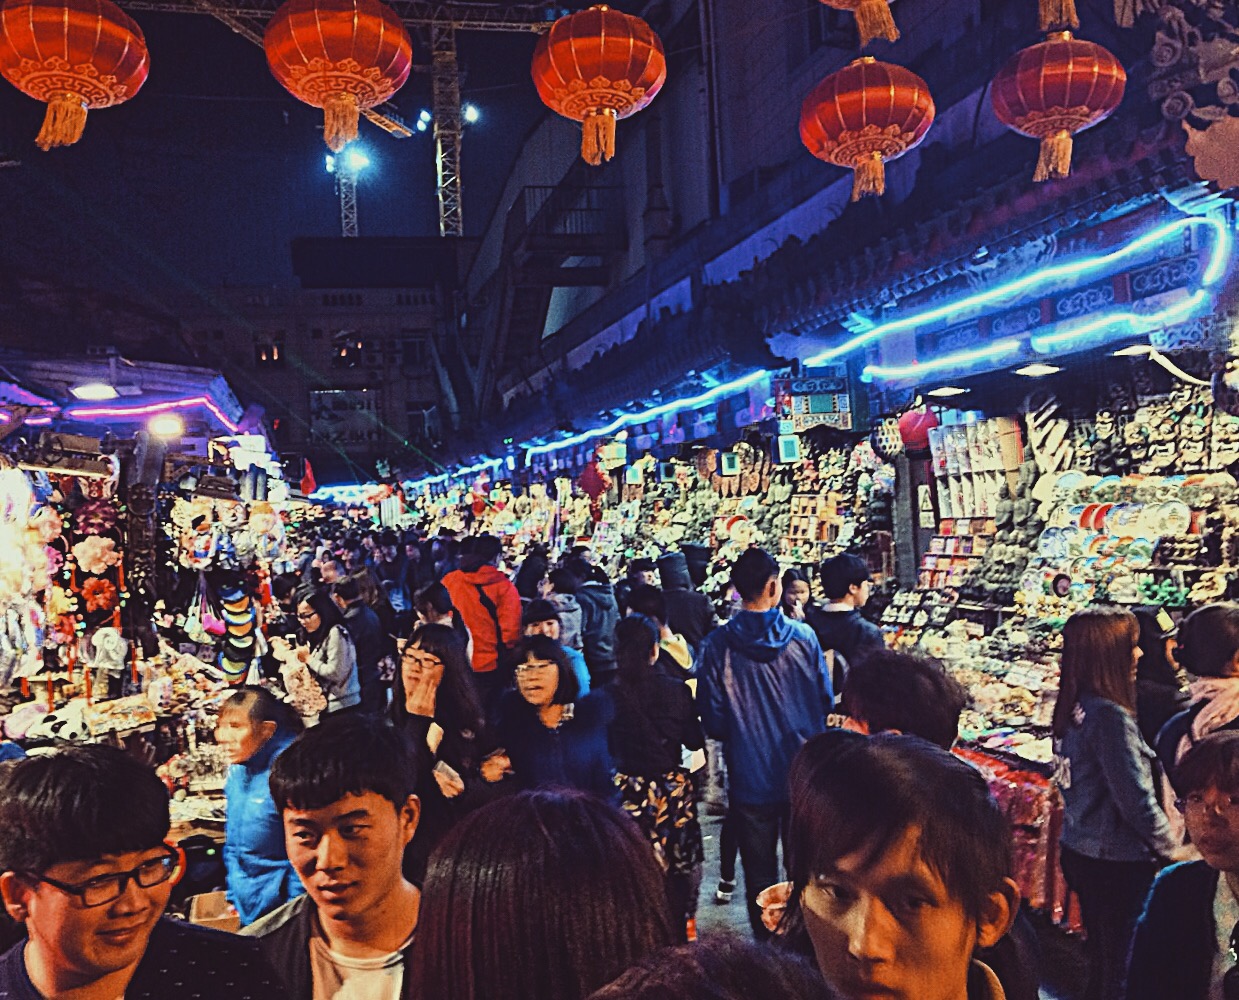 Wangfujing Snack Street